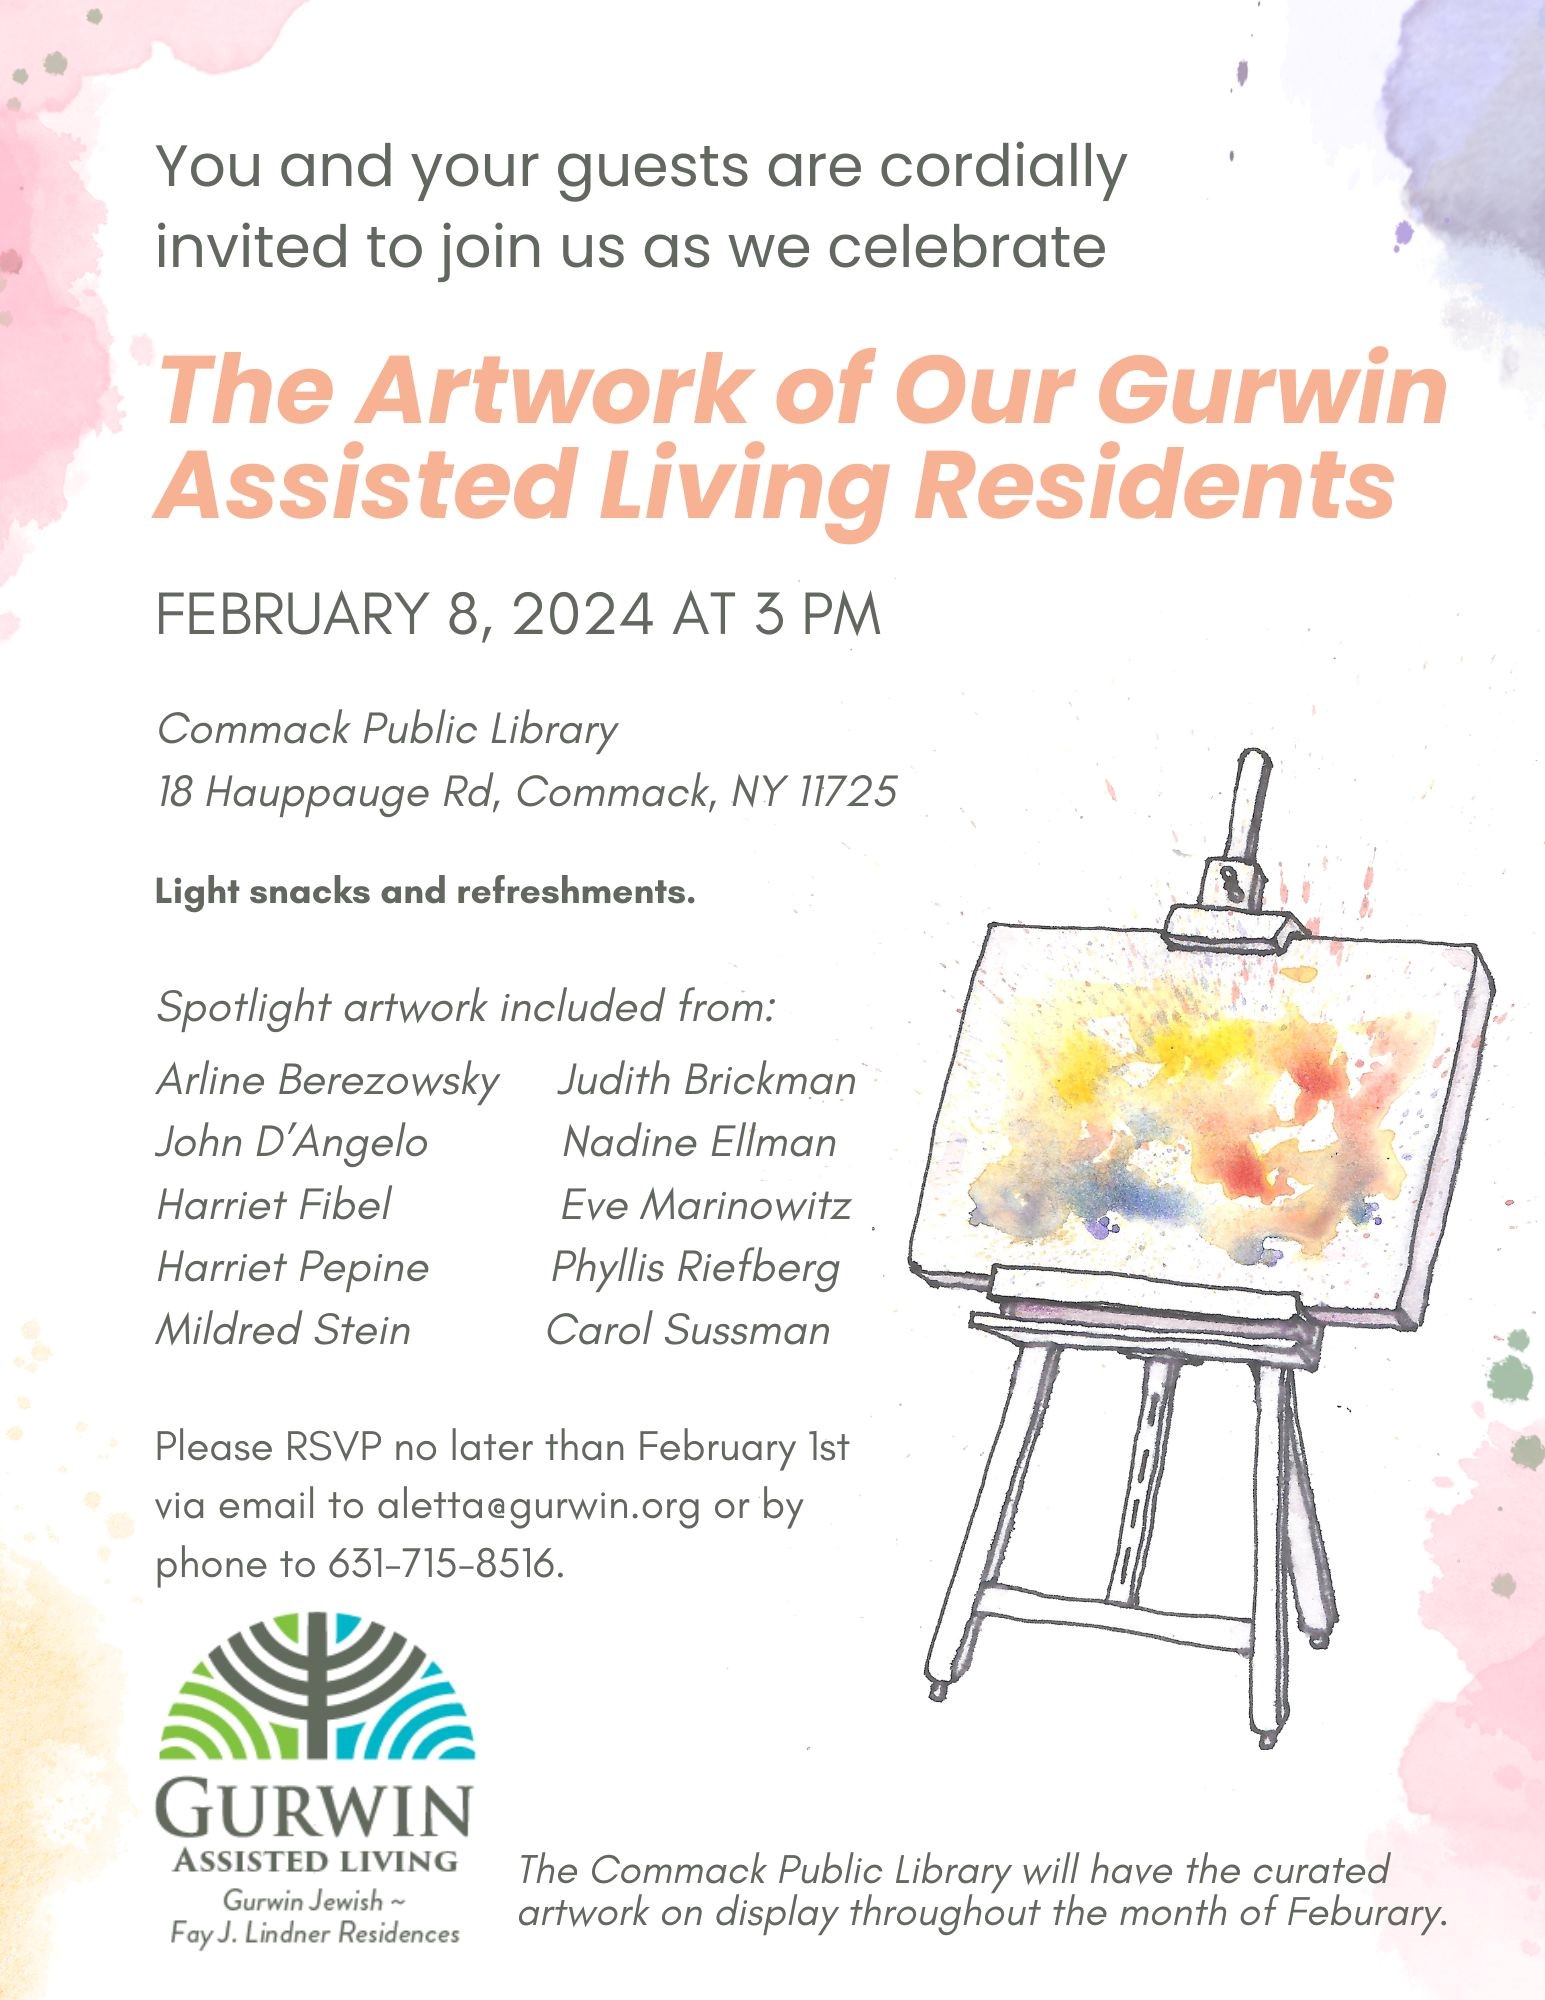 Invitation to Gurwin Art show at Commack Public Library